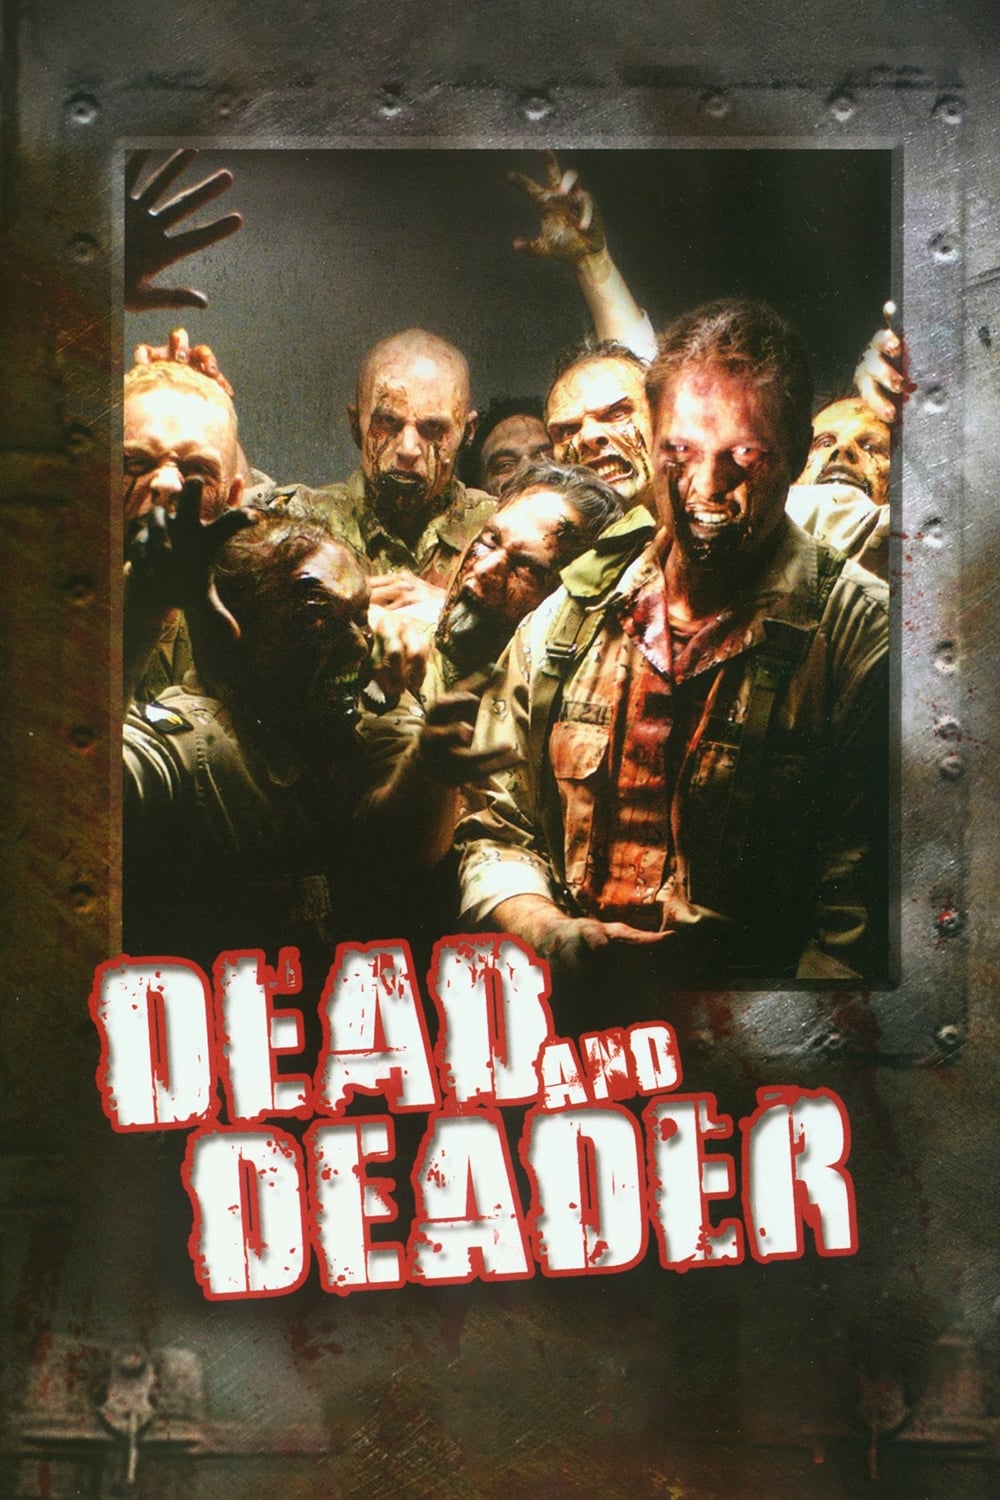 Dead and deader - Invasion der Zombies (2006)